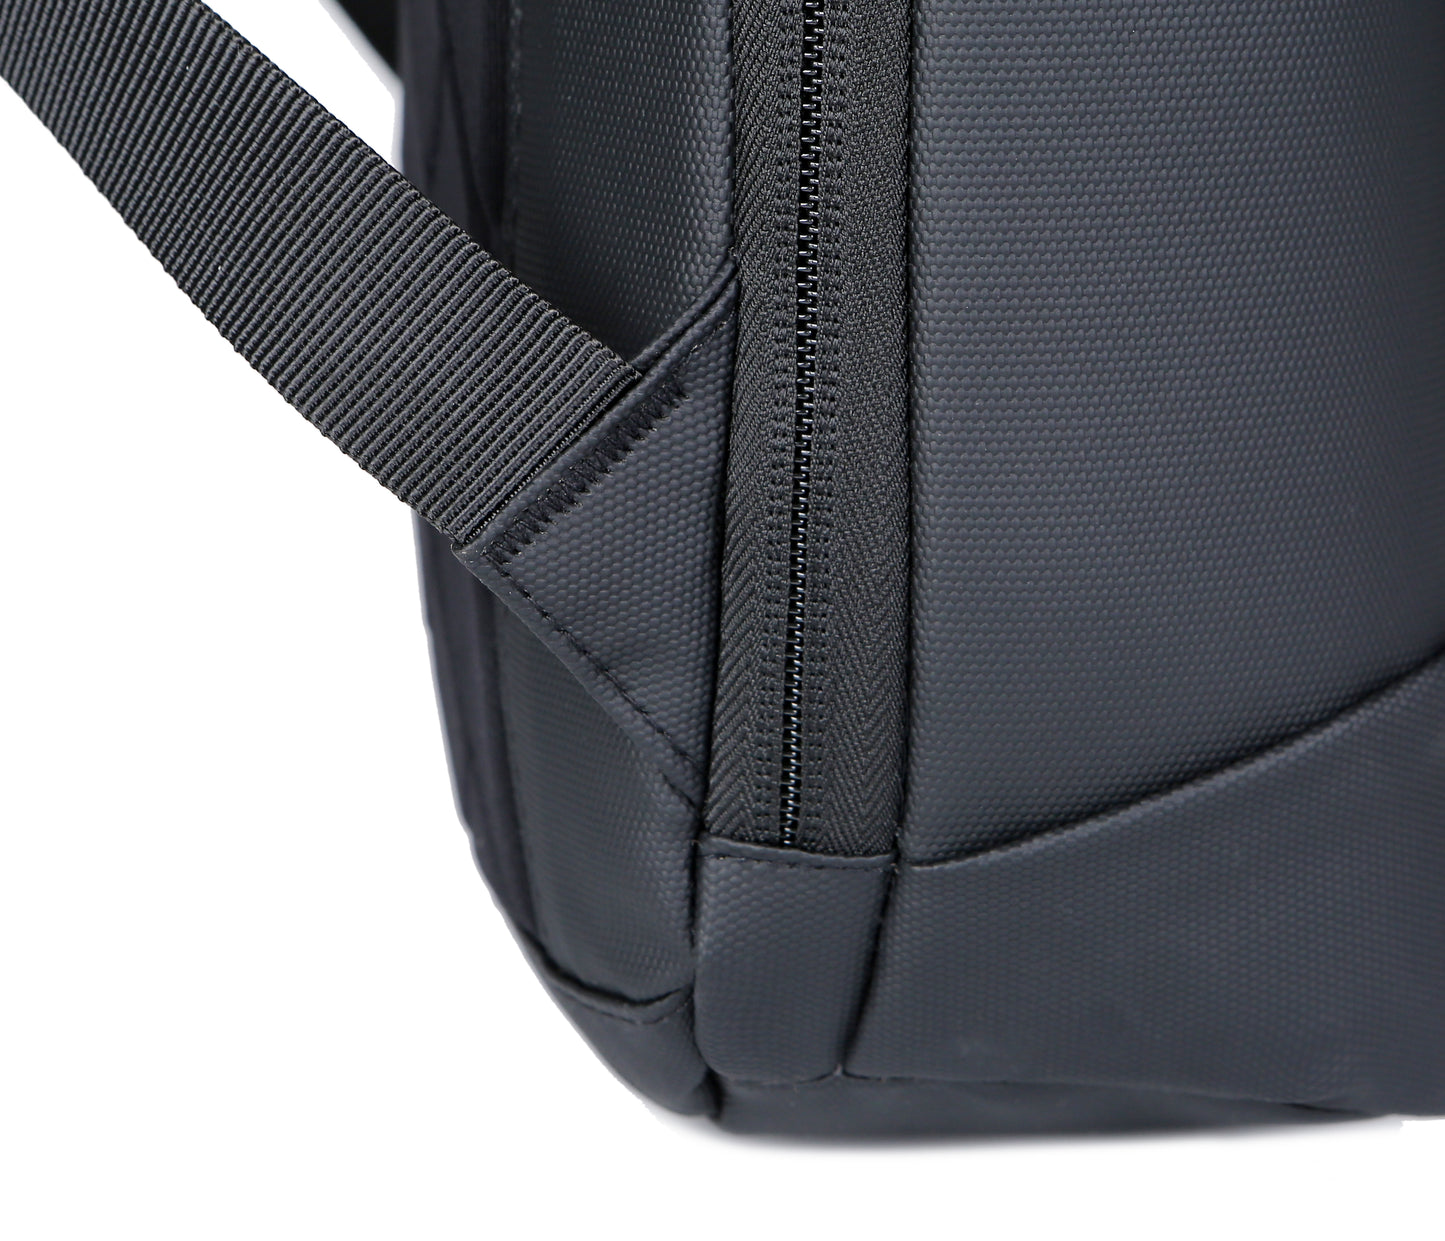 Backpack Sponge Thinbag Backpack 15.6 Black